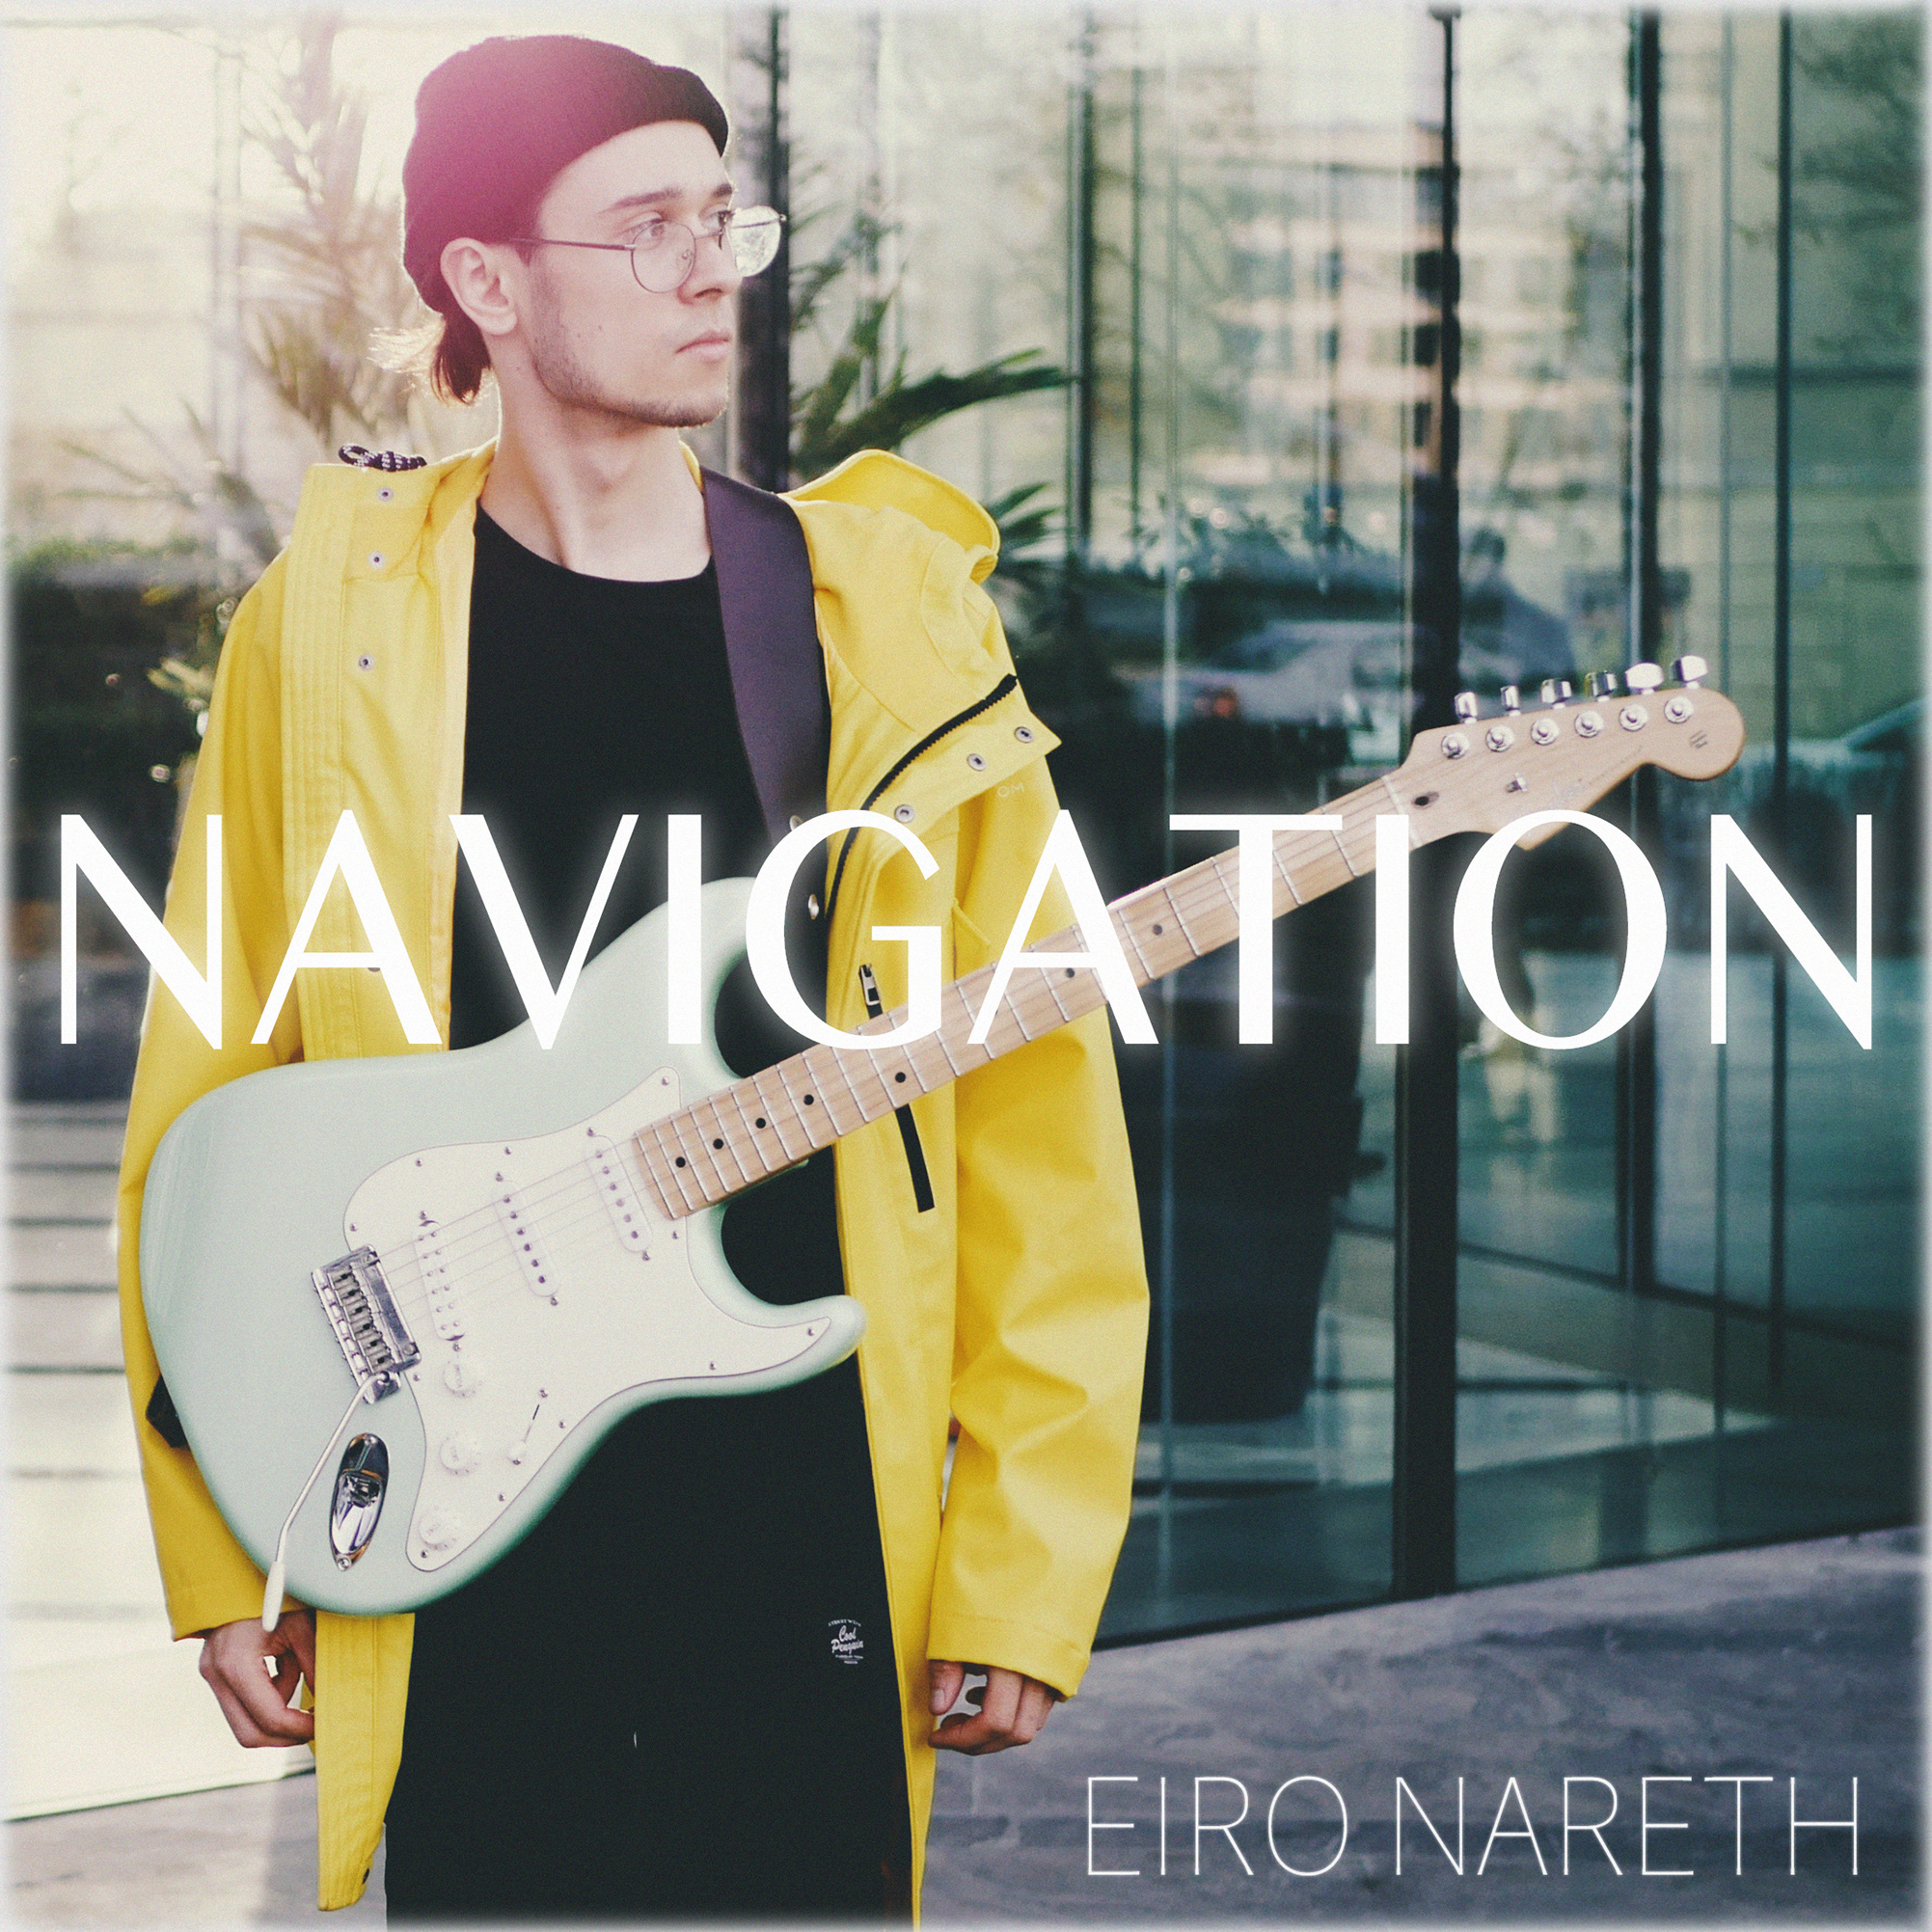 Navigation-album-cover-vk-3.jpg